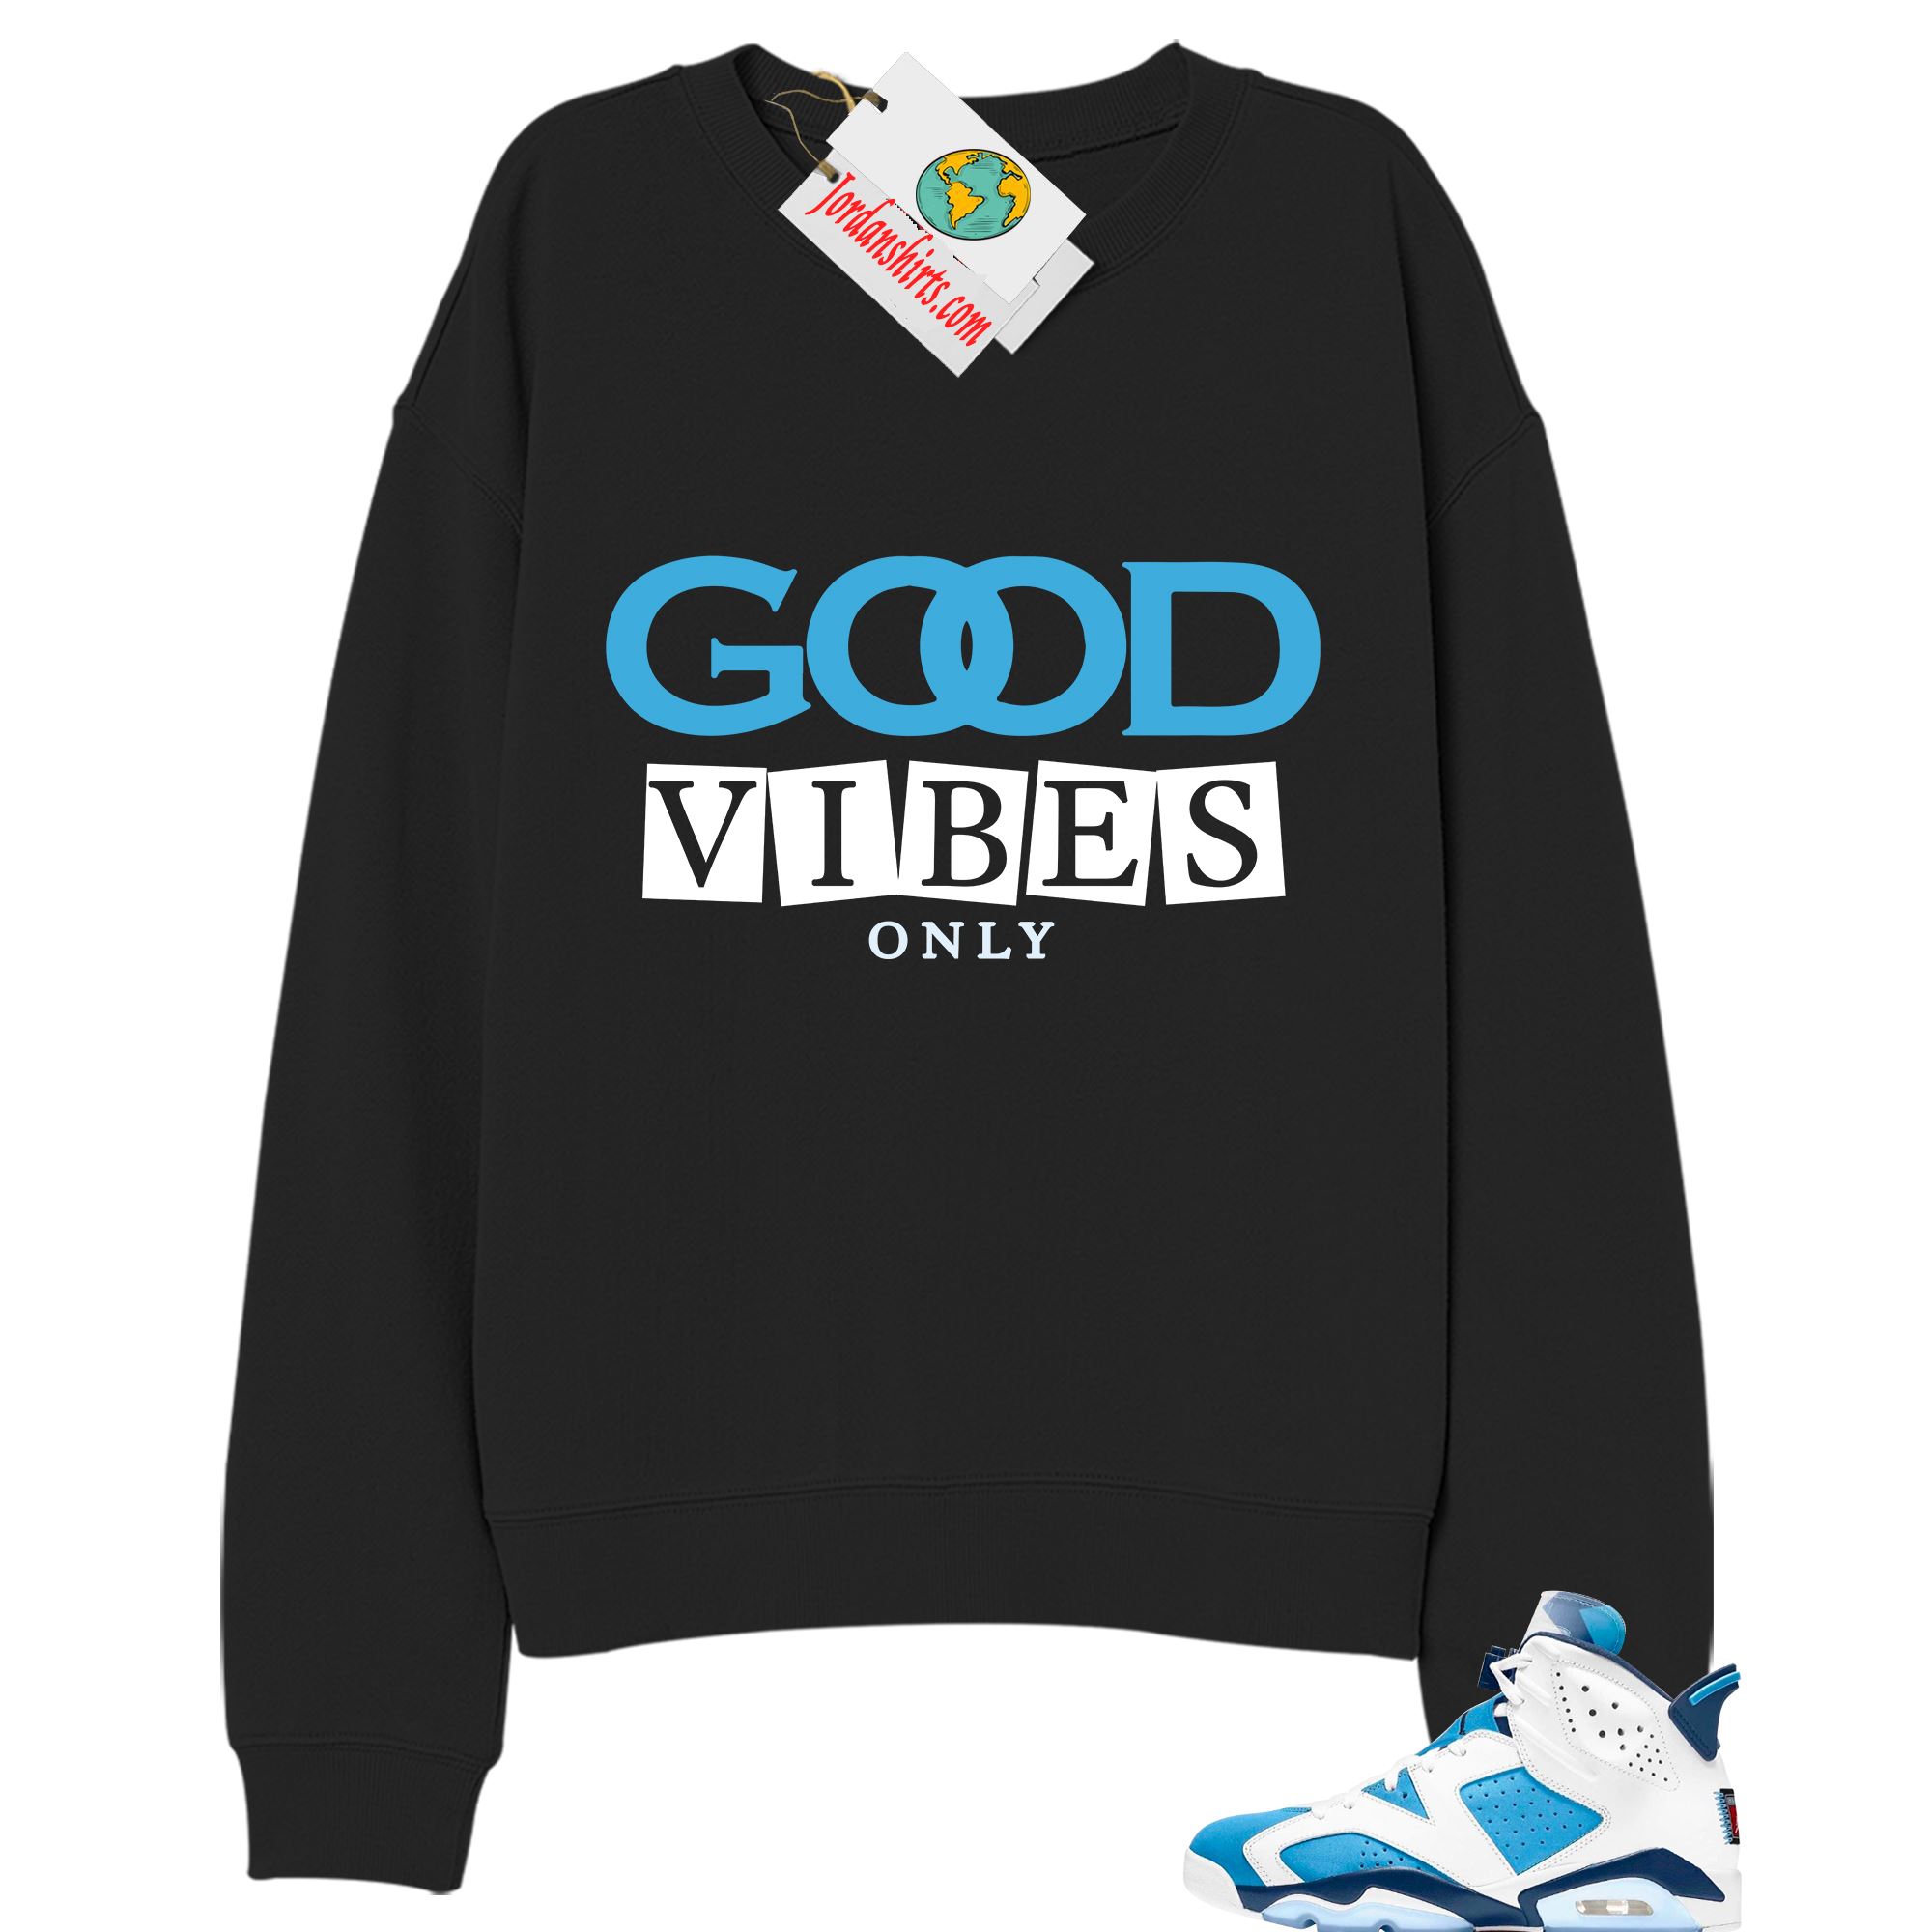 Jordan 6 Sweatshirt, Good Vibes Only Black Sweatshirt Air Jordan 6 Unc 6s Plus Size Up To 5xl